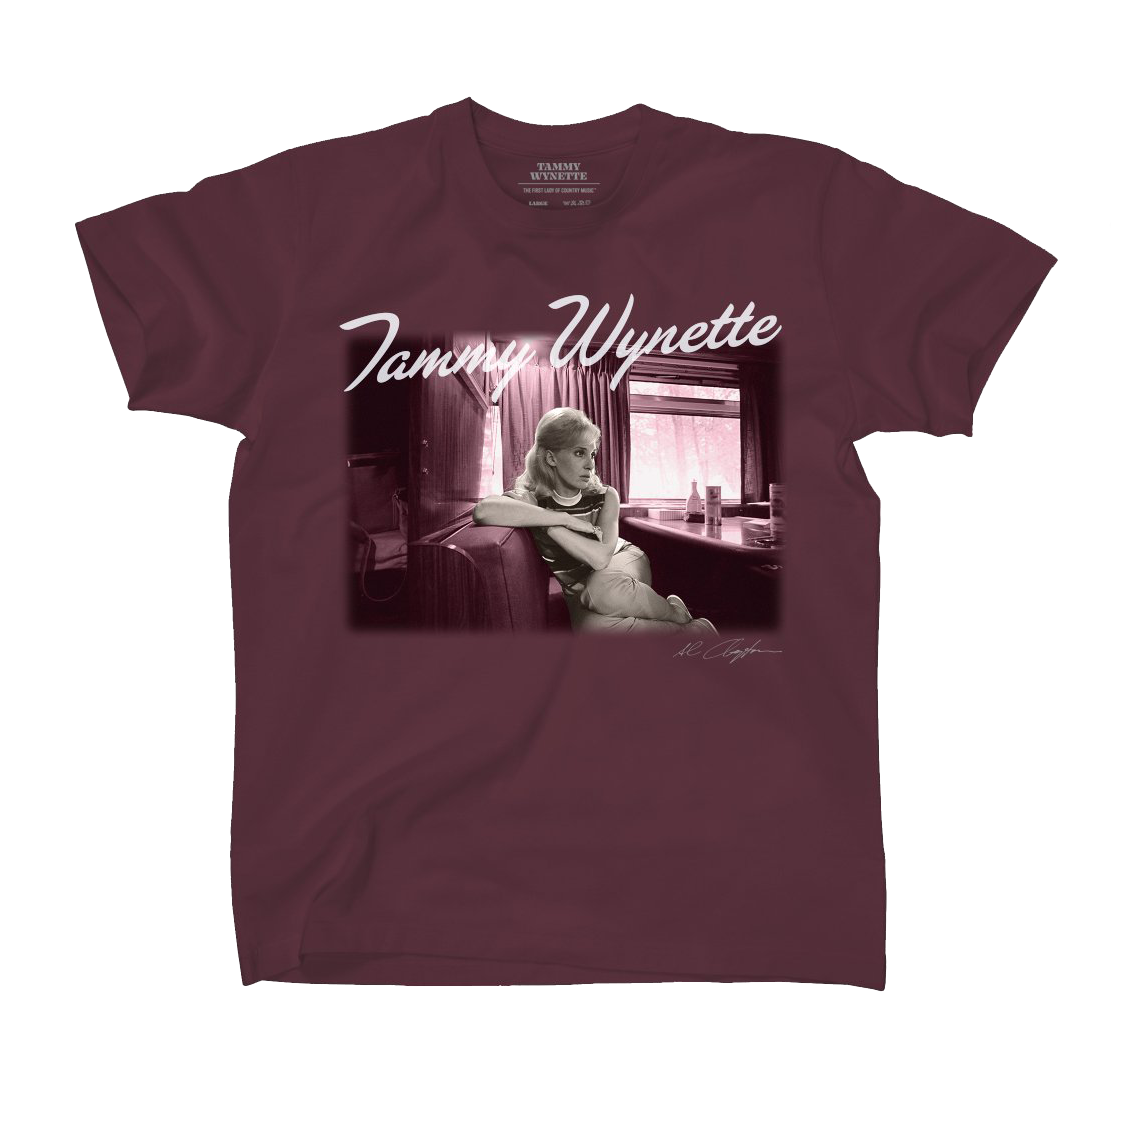 Tammy Wynette Tour Bus T-Shirt (Maroon)